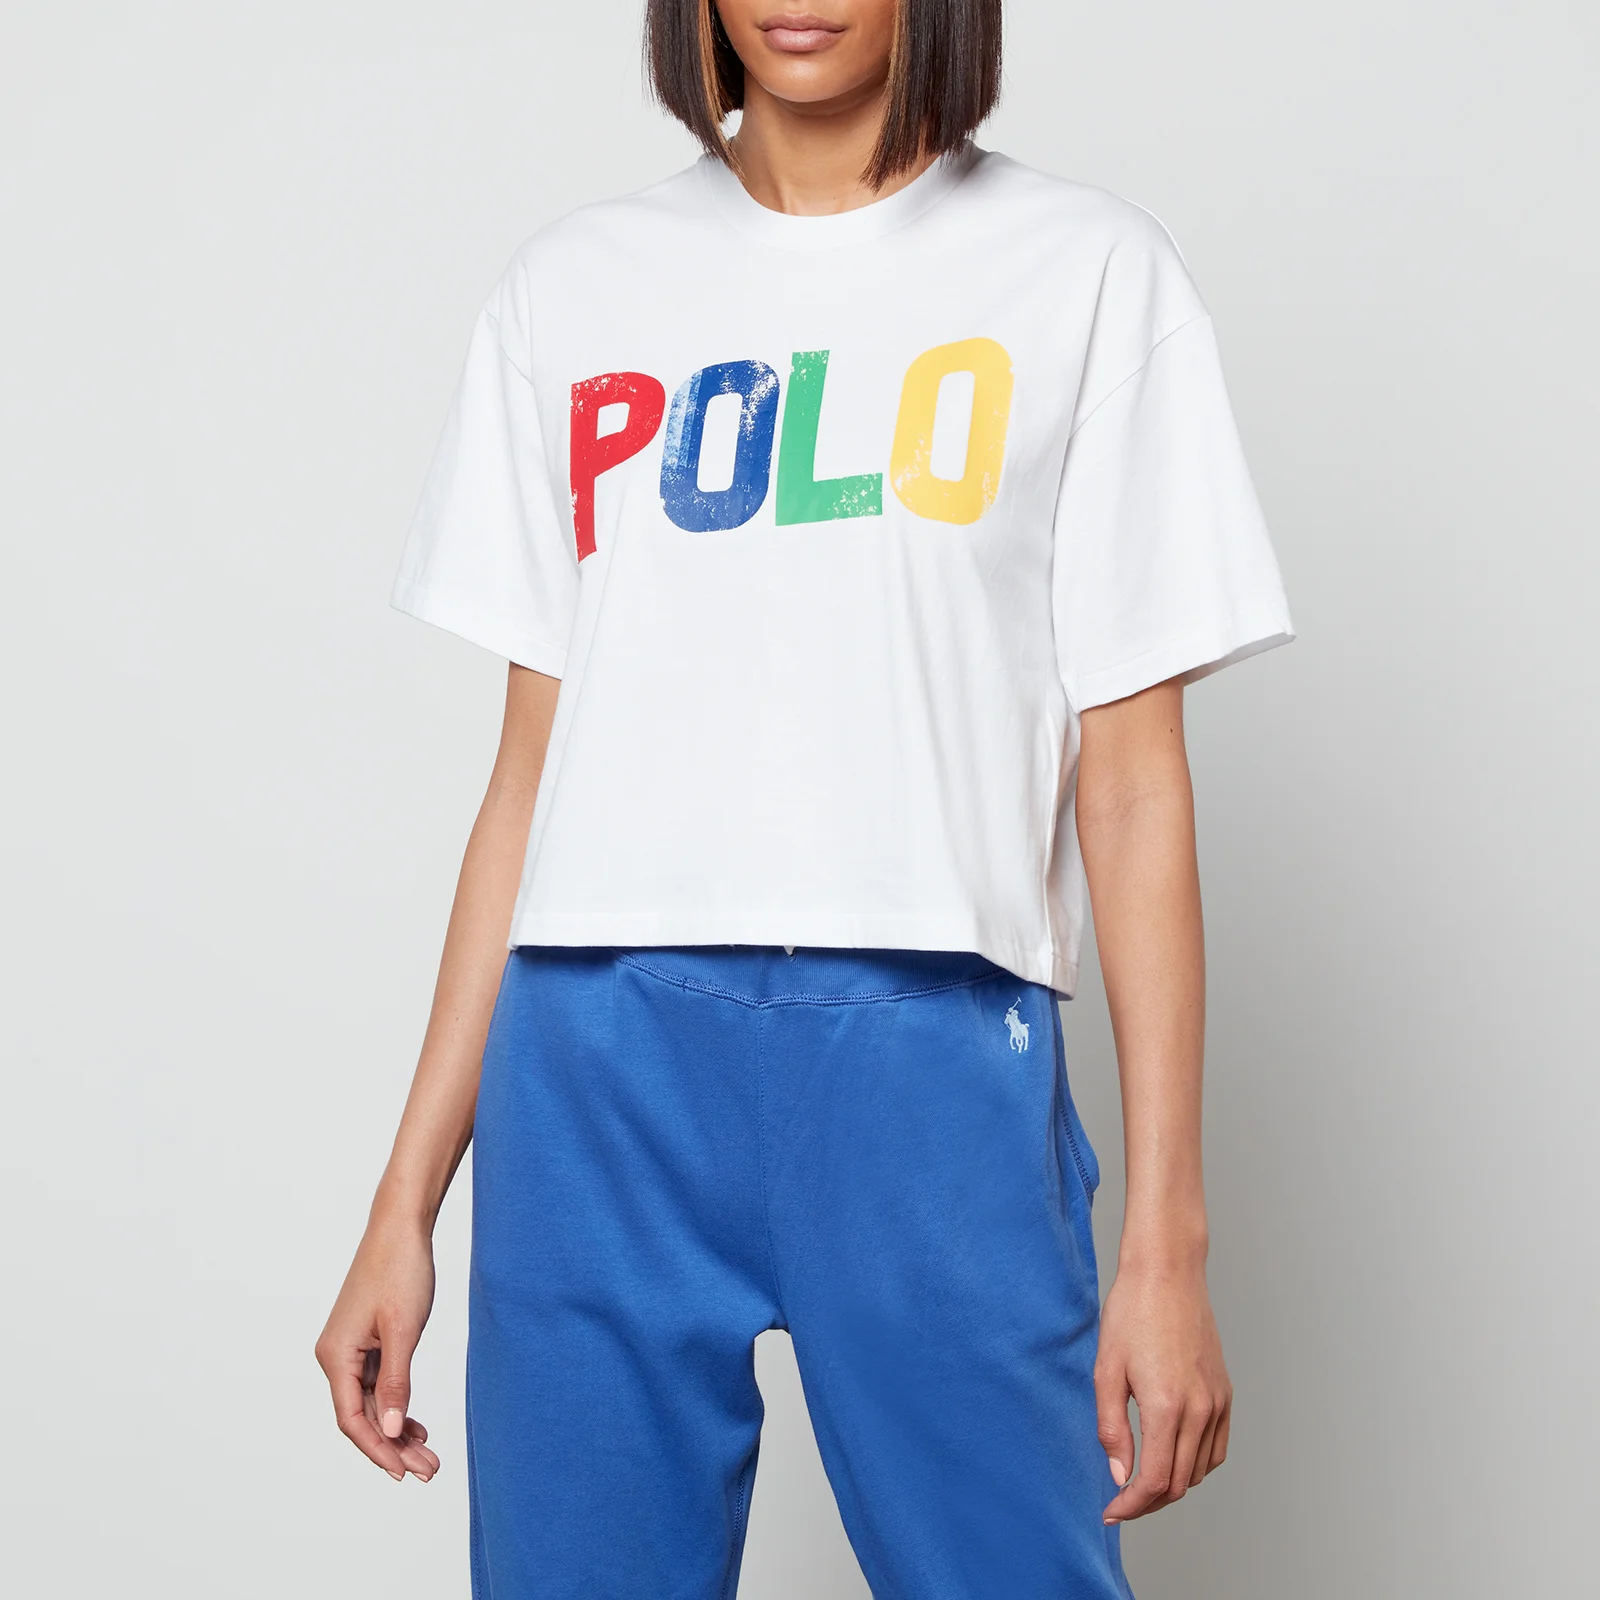 Polo Ralph Lauren Women's Polo Logo Cropped T-Shirt - White Image 1